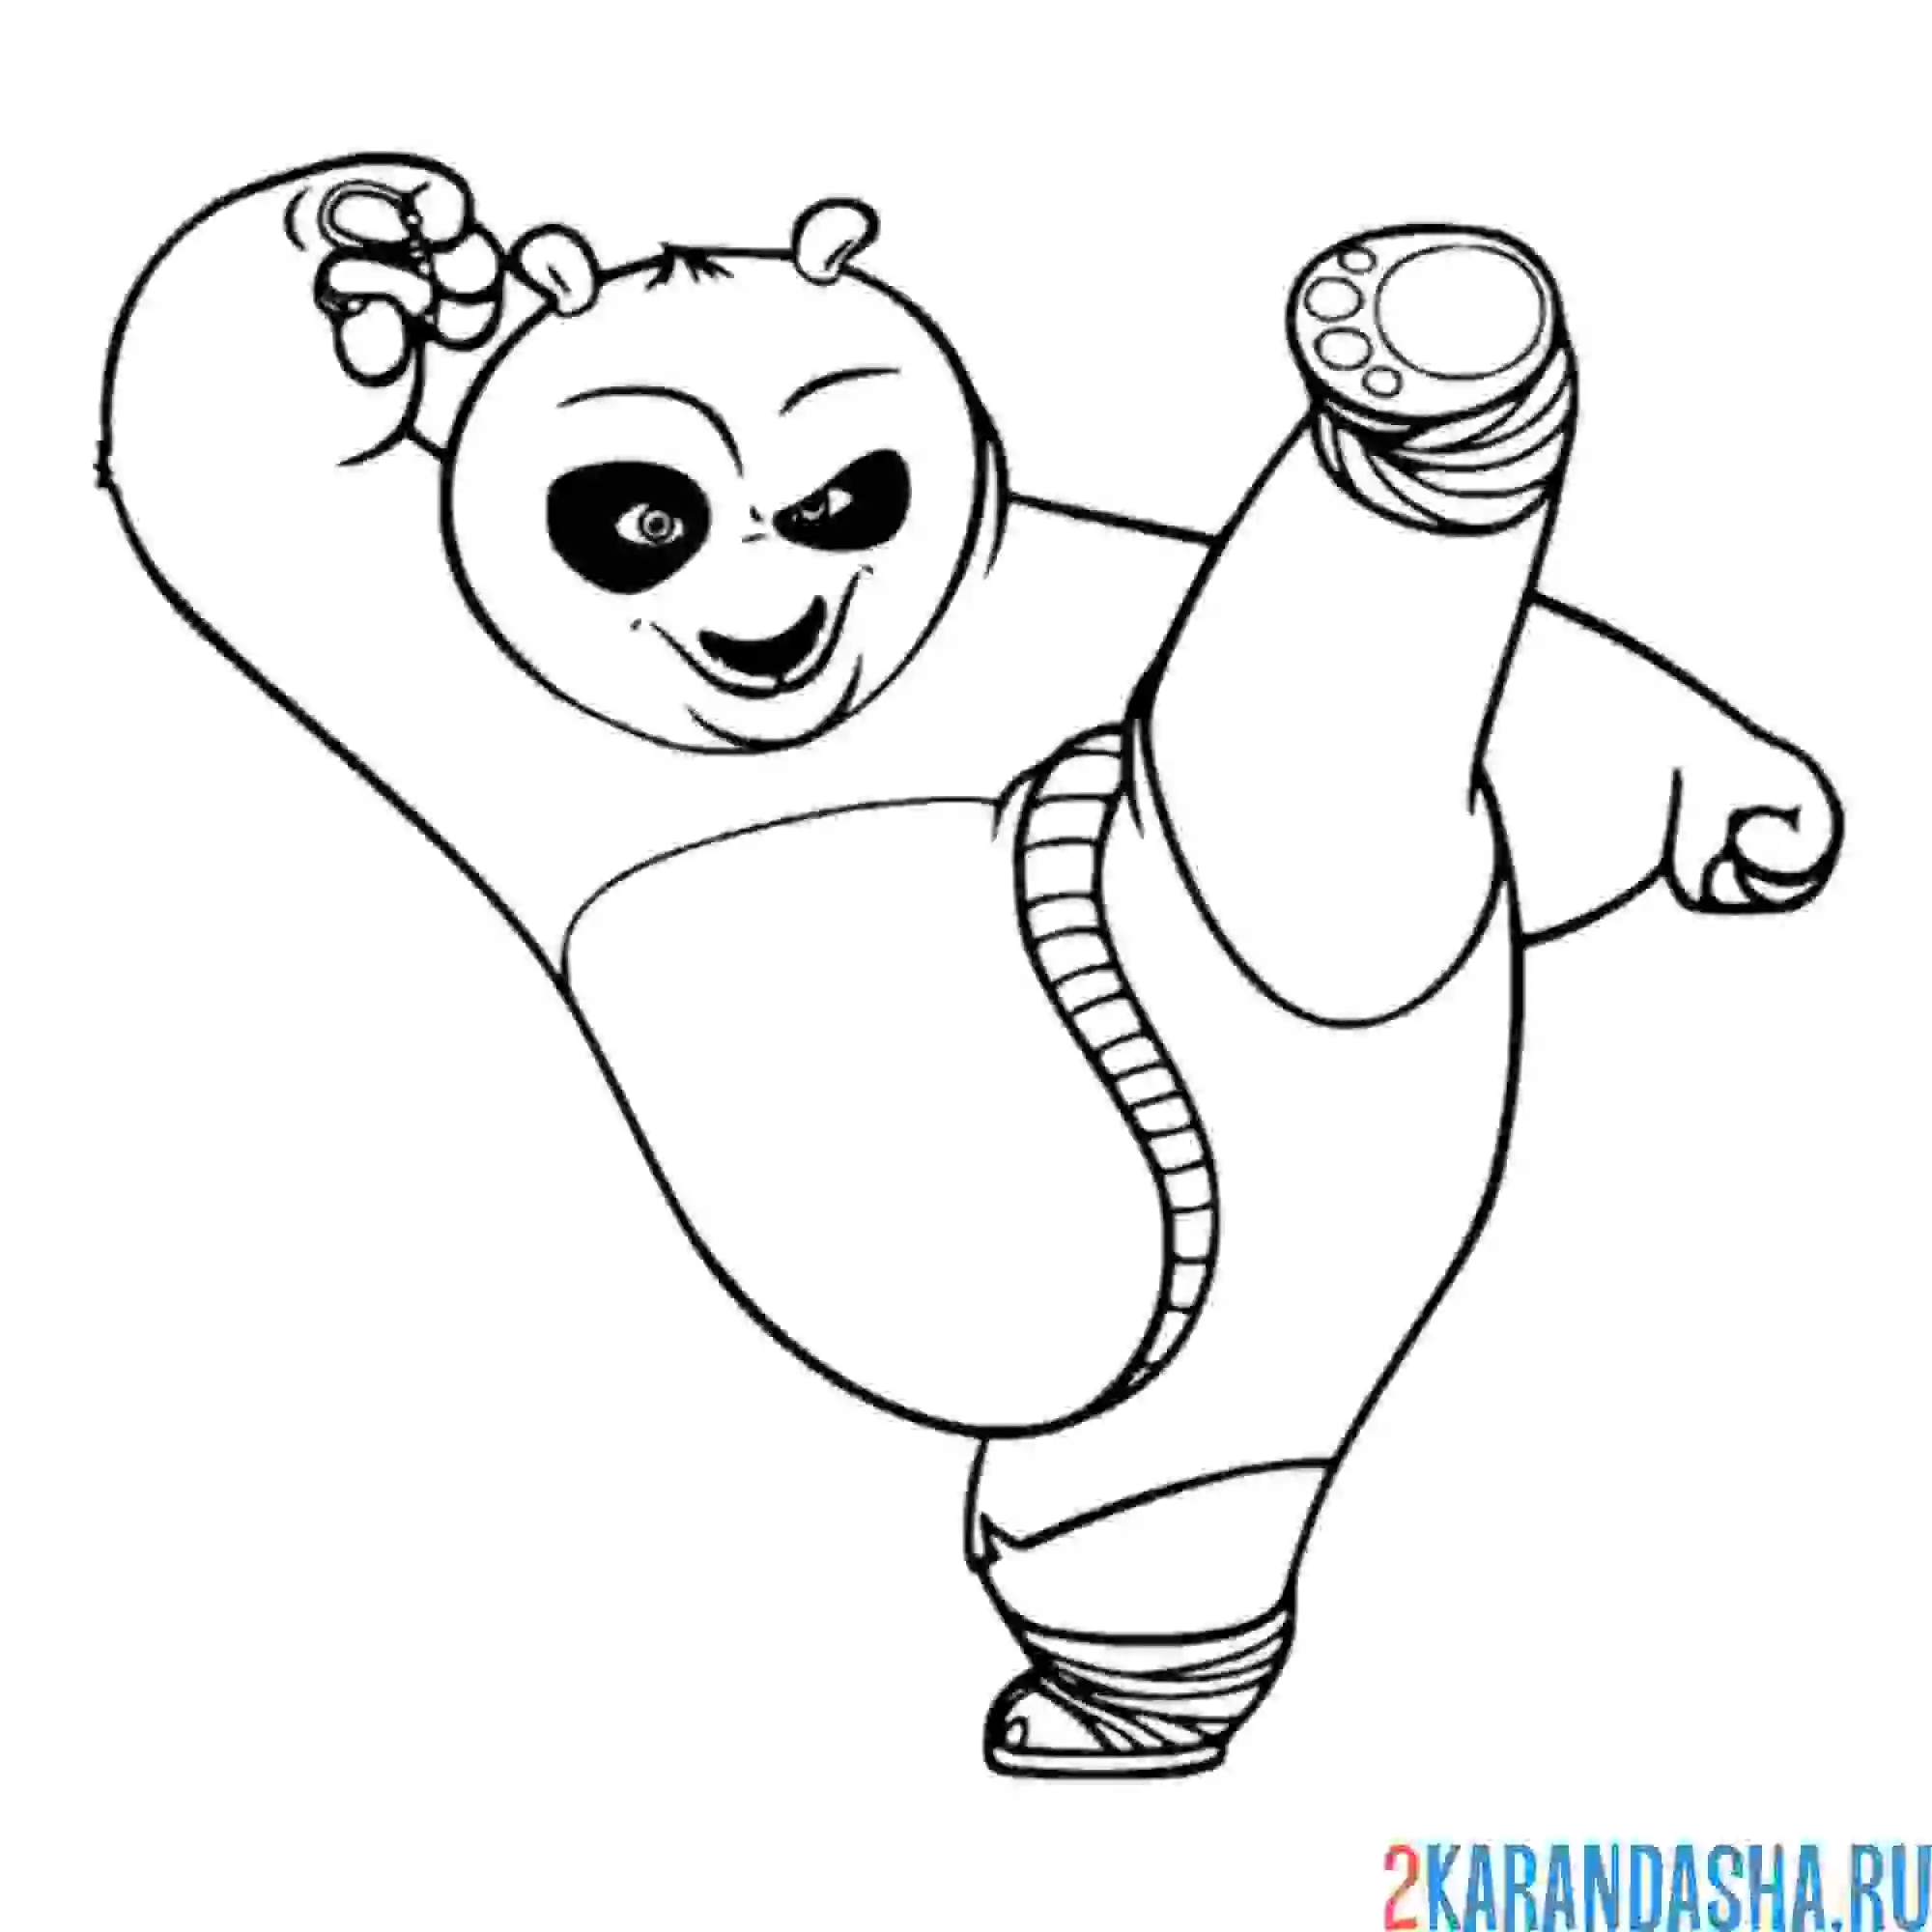 Раскраска кунг фу панда. Кунфу Панда разукрашка. Кунг фу Панда раскраска для детей. Раскраска кунг фу Панда 3. Раскраска Куен фу Панда.